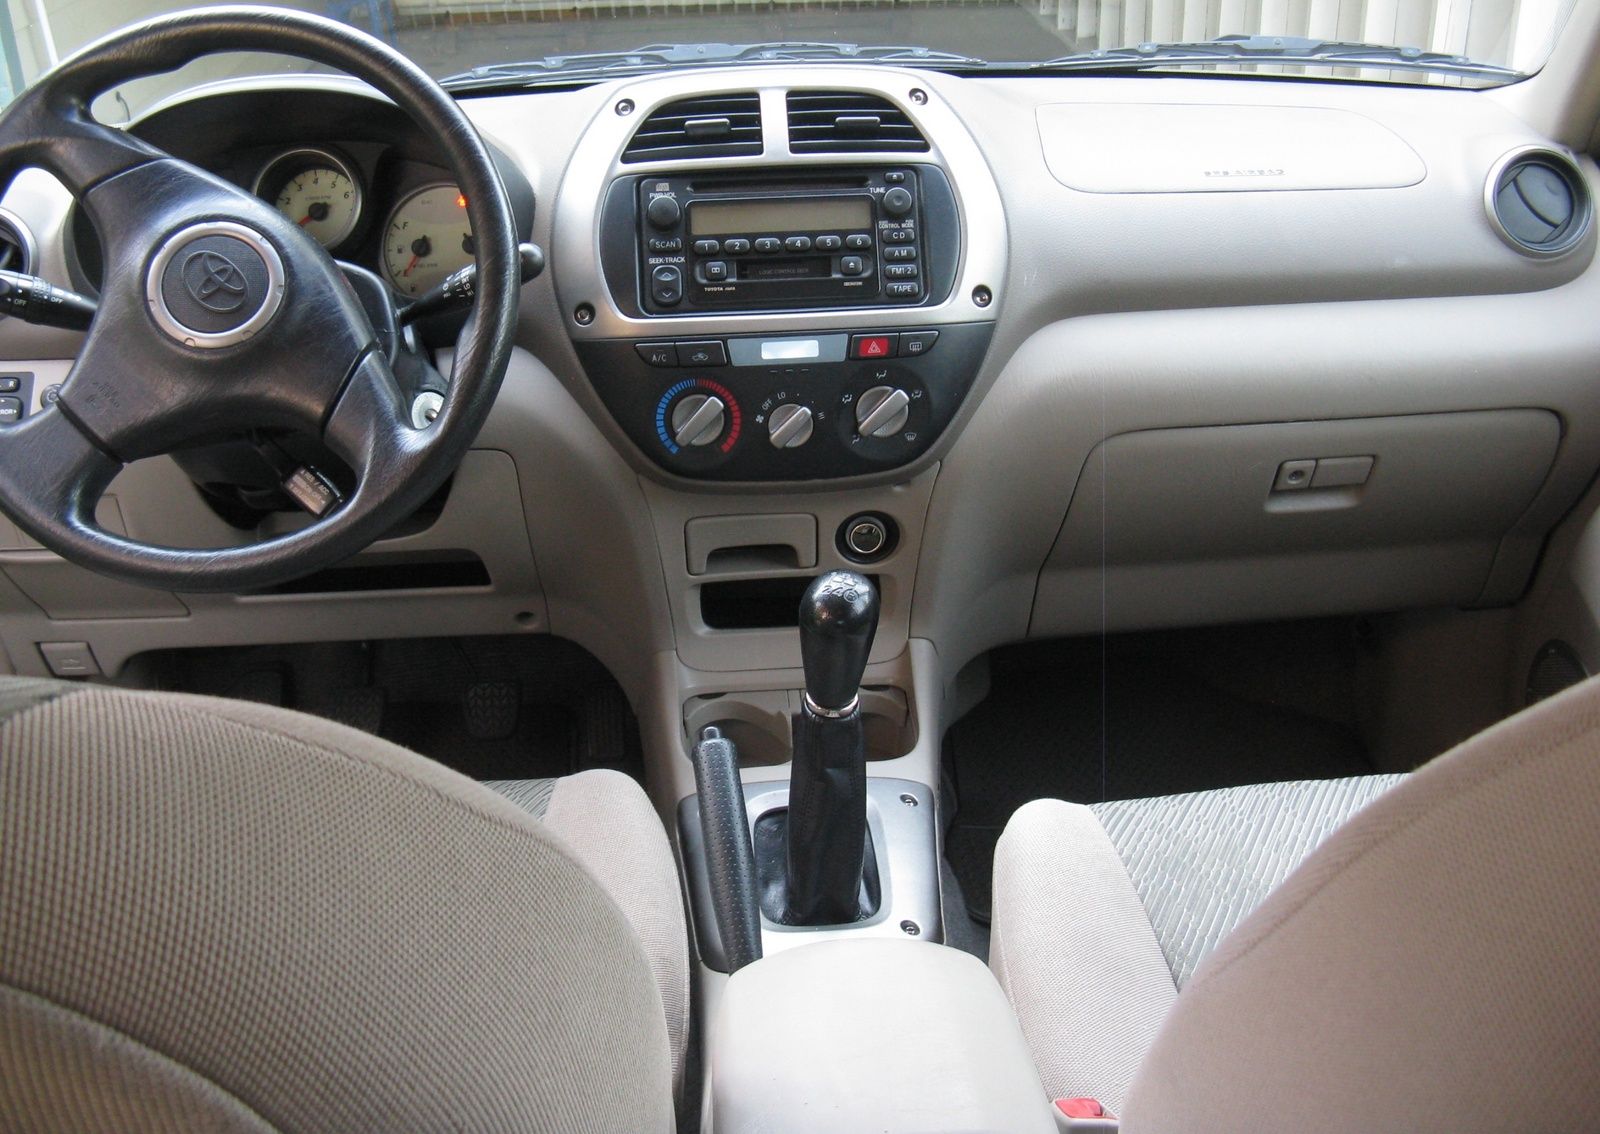 2001 Toyota RAV4 - Interior Pictures - CarGurus | Rav4, Toyota rav4, Toyota  rav4 interior